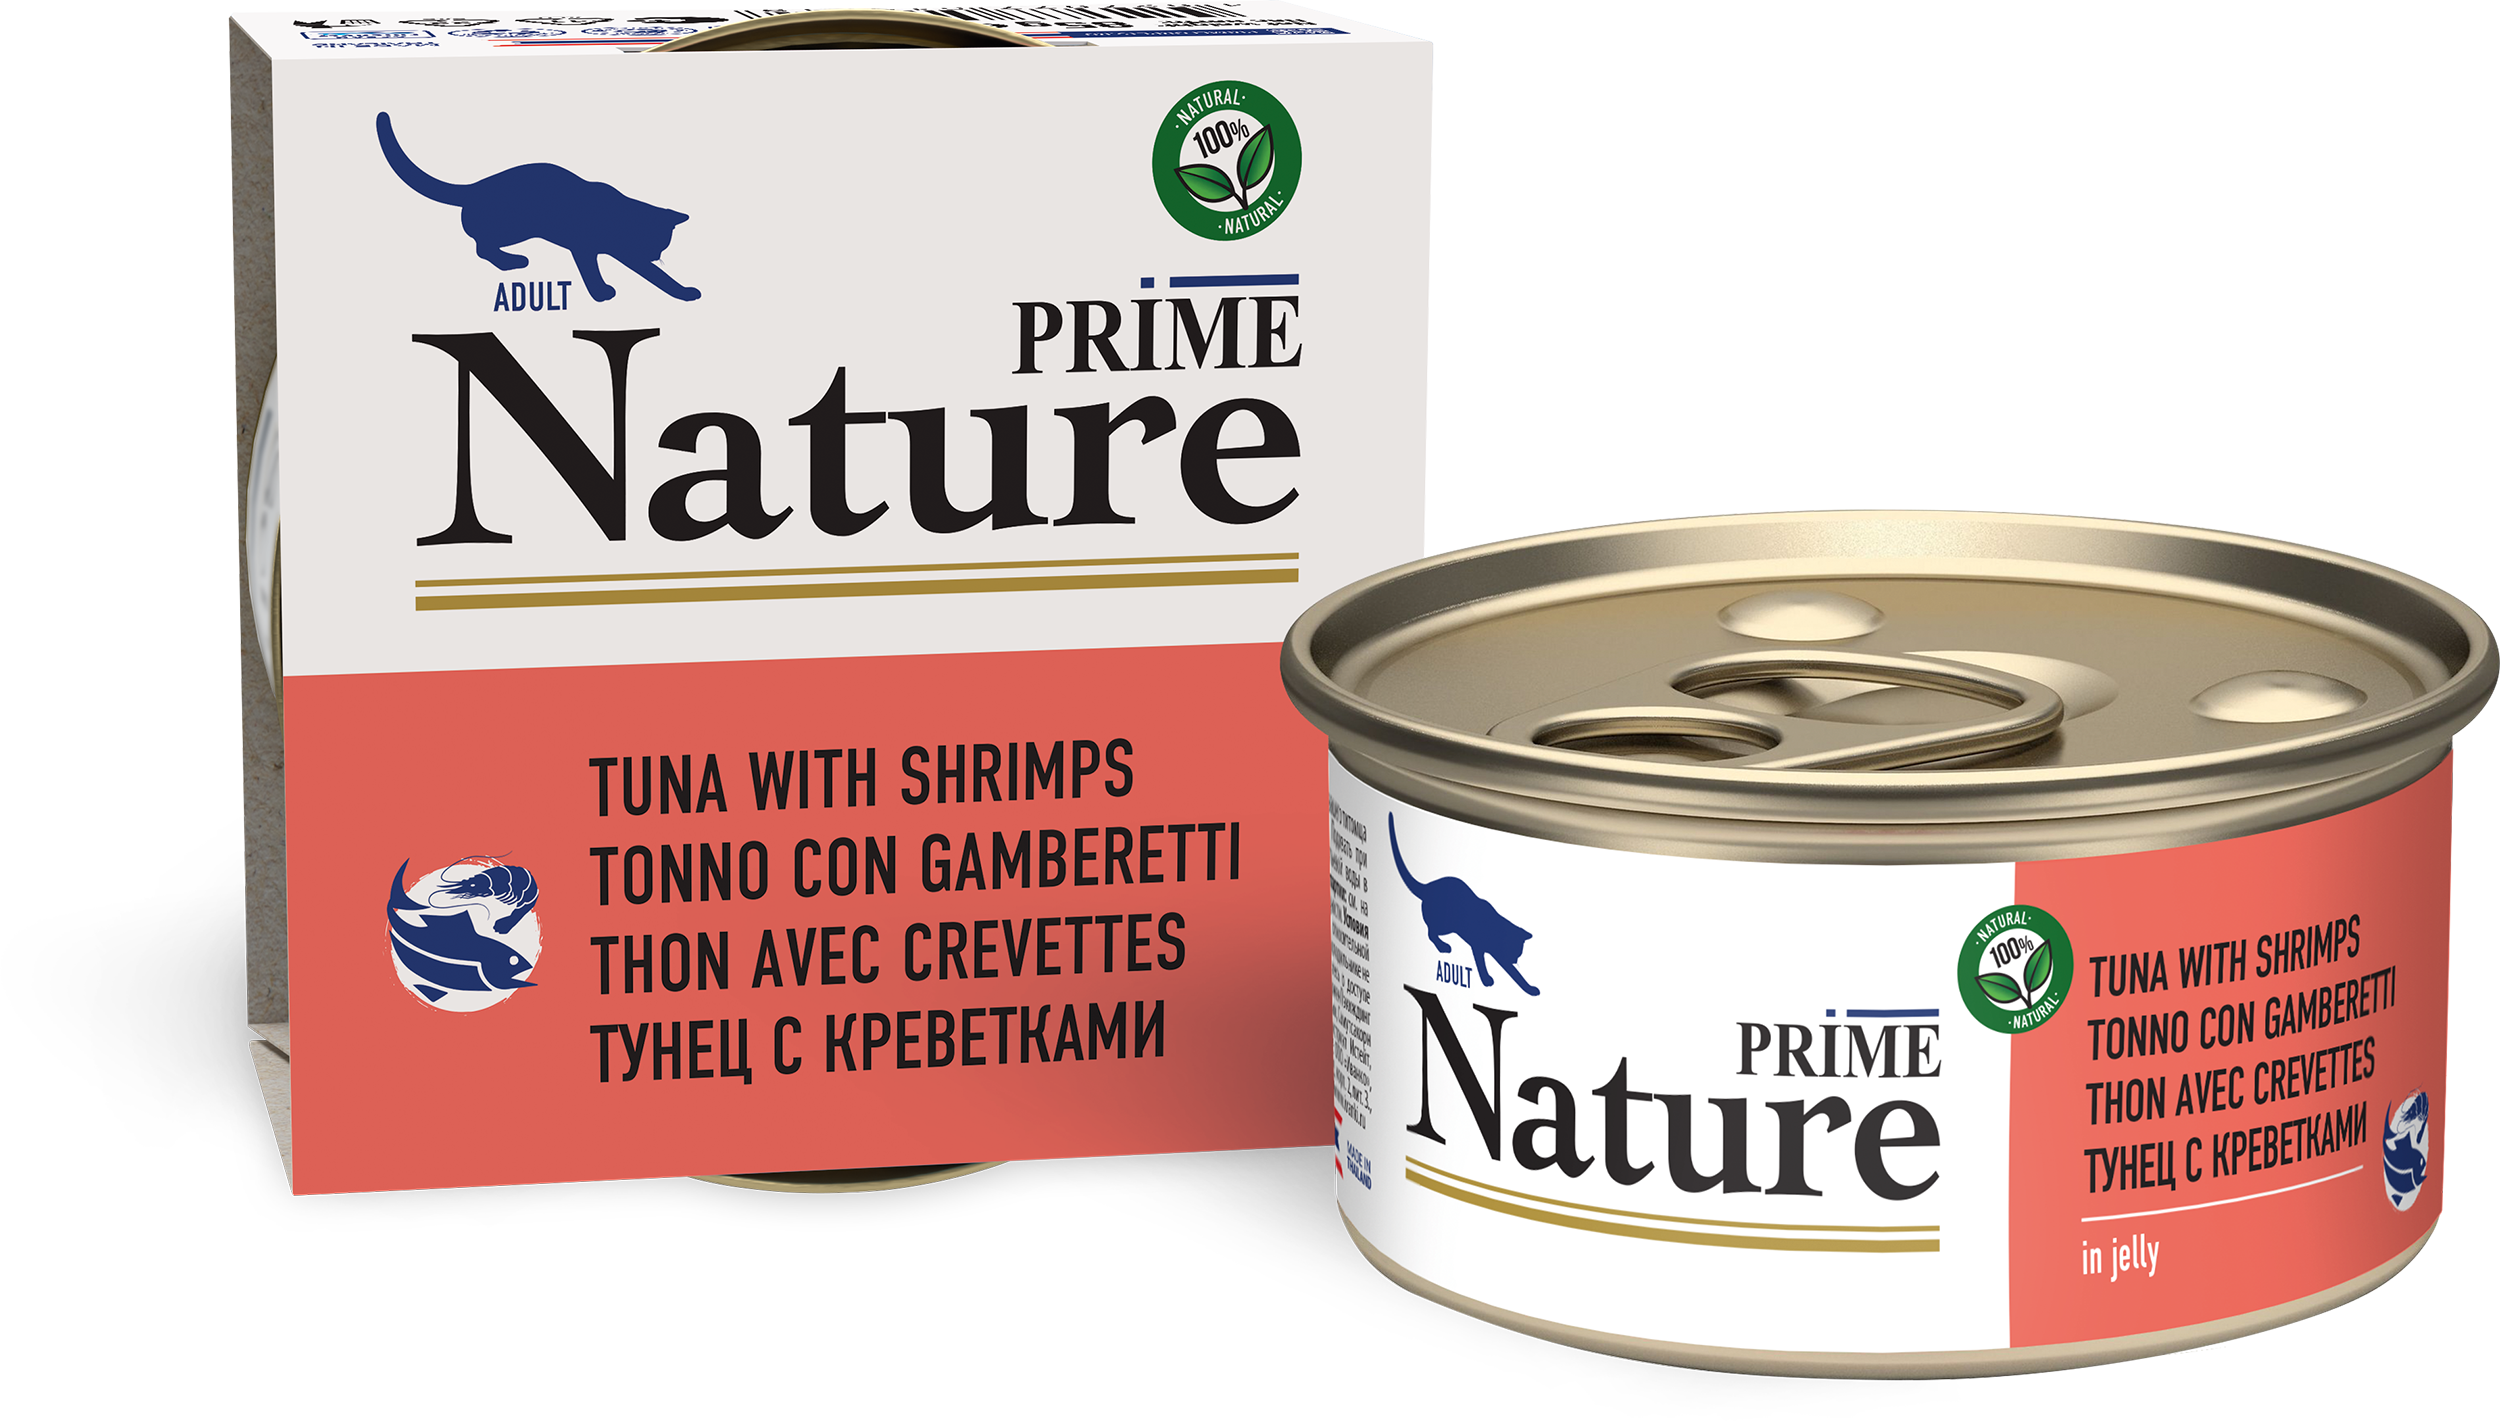 Tuna with shrimps